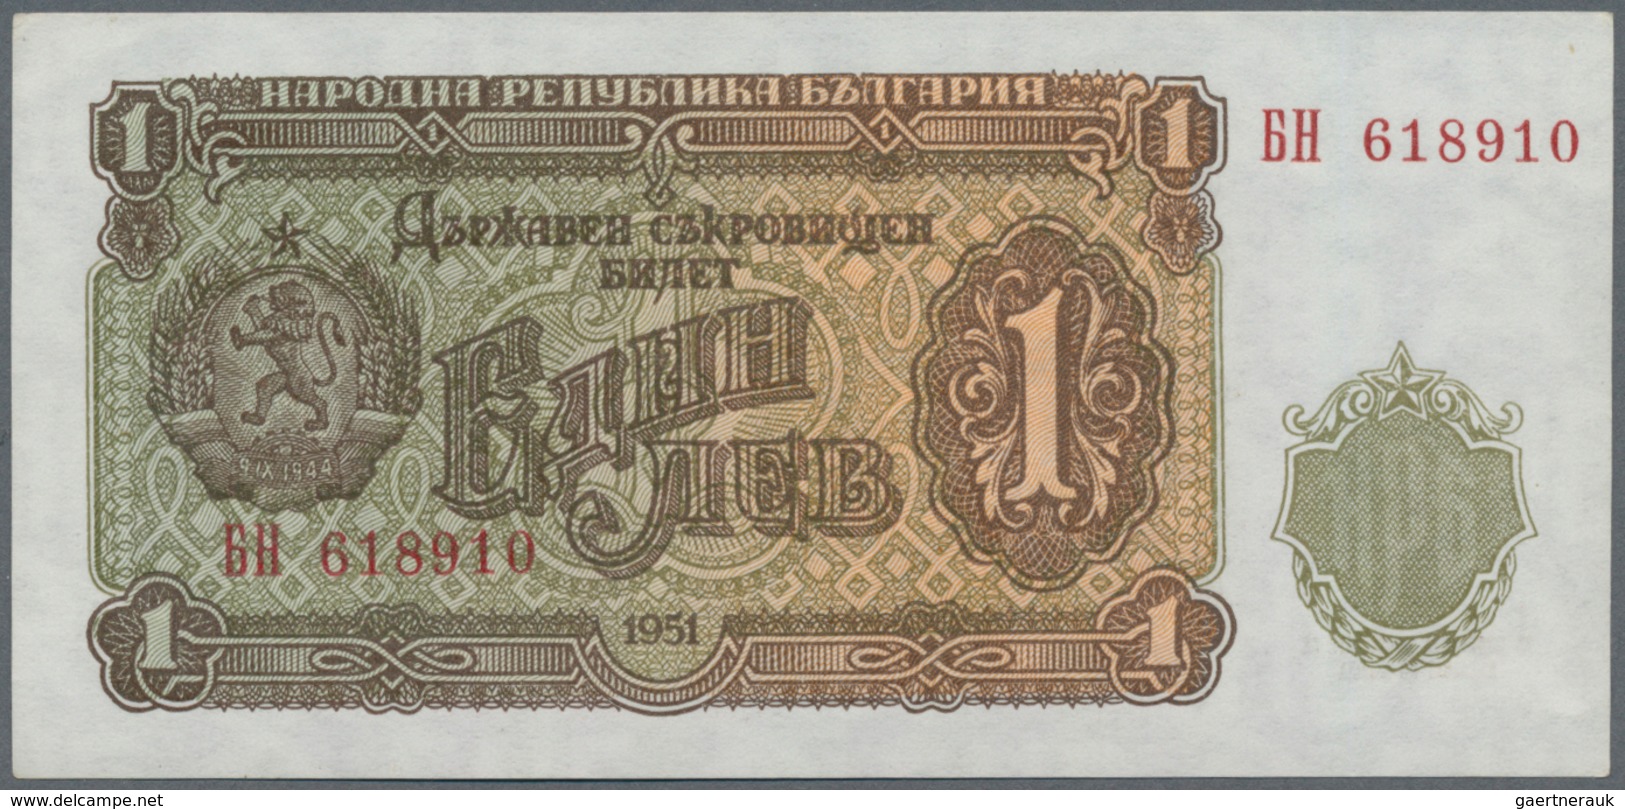 Bulgaria / Bulgarien: Very Nice Set With 20 Banknotes 1 - 500 Leva 1951-1990, P.80a-98, All In AUNC/ - Bulgarie